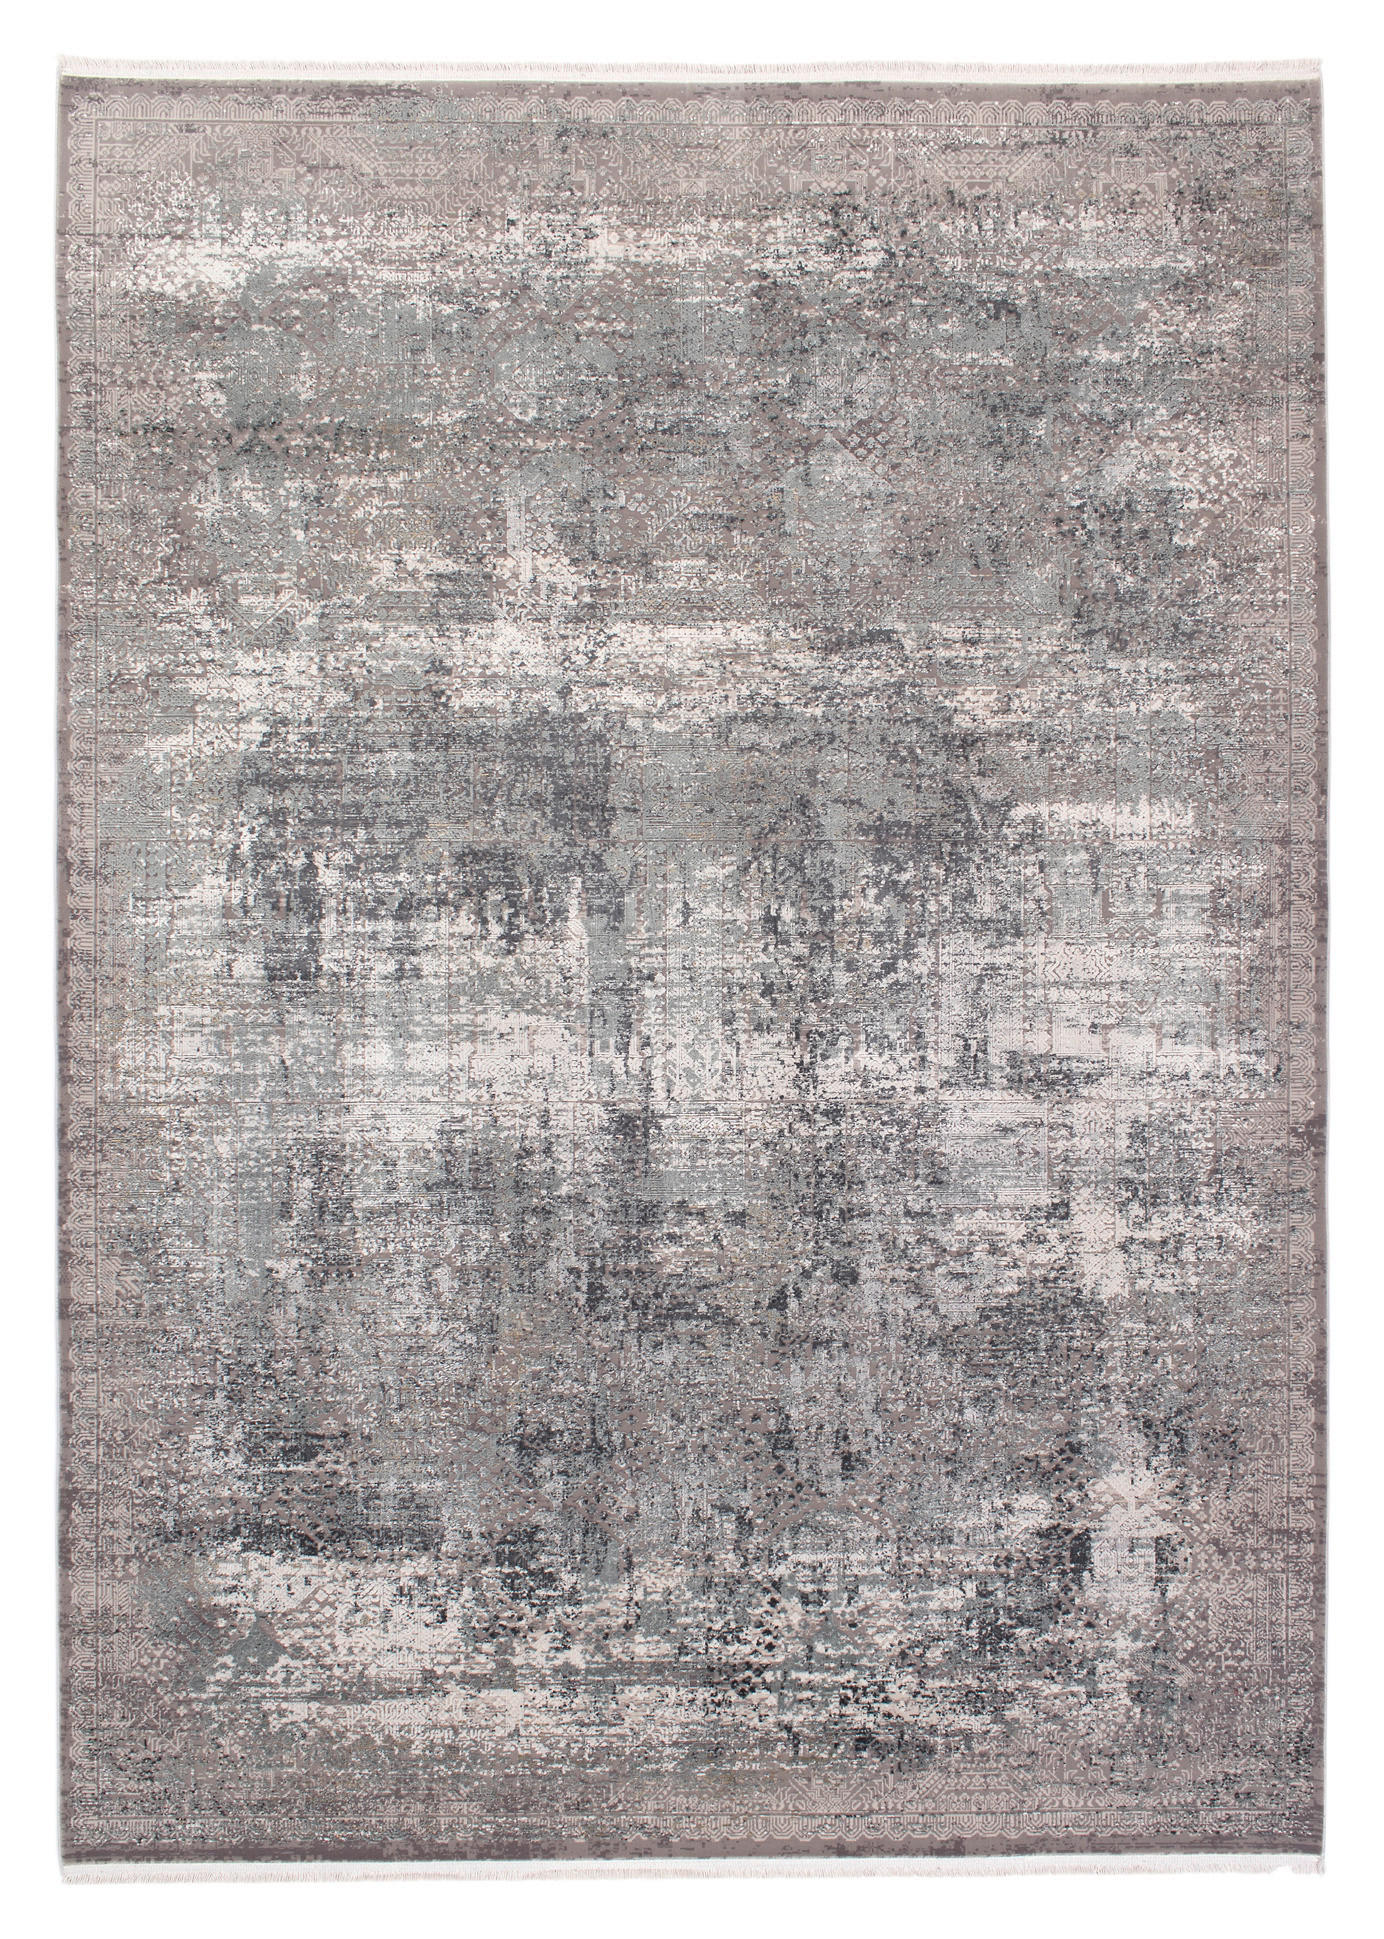 WEBTEPPICH 160/230 cm Apollo  - Dunkelgrau/Hellgrau, Design, Textil (160/230cm) - Musterring